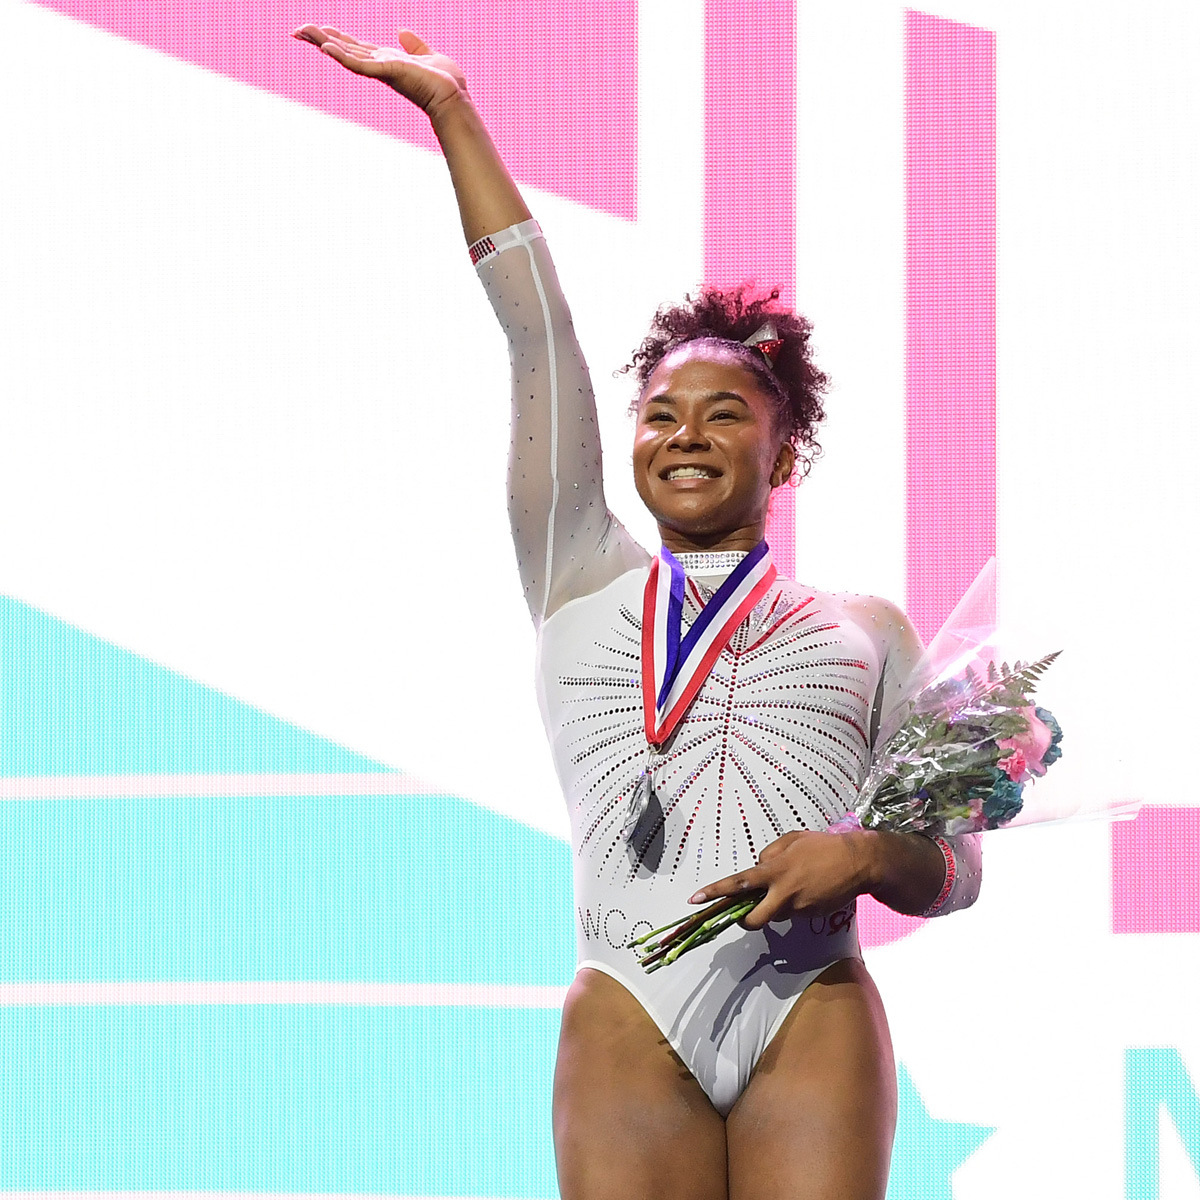 2016 U.S. Men's Olympic Gymnastics Team Named - FloGymnastics